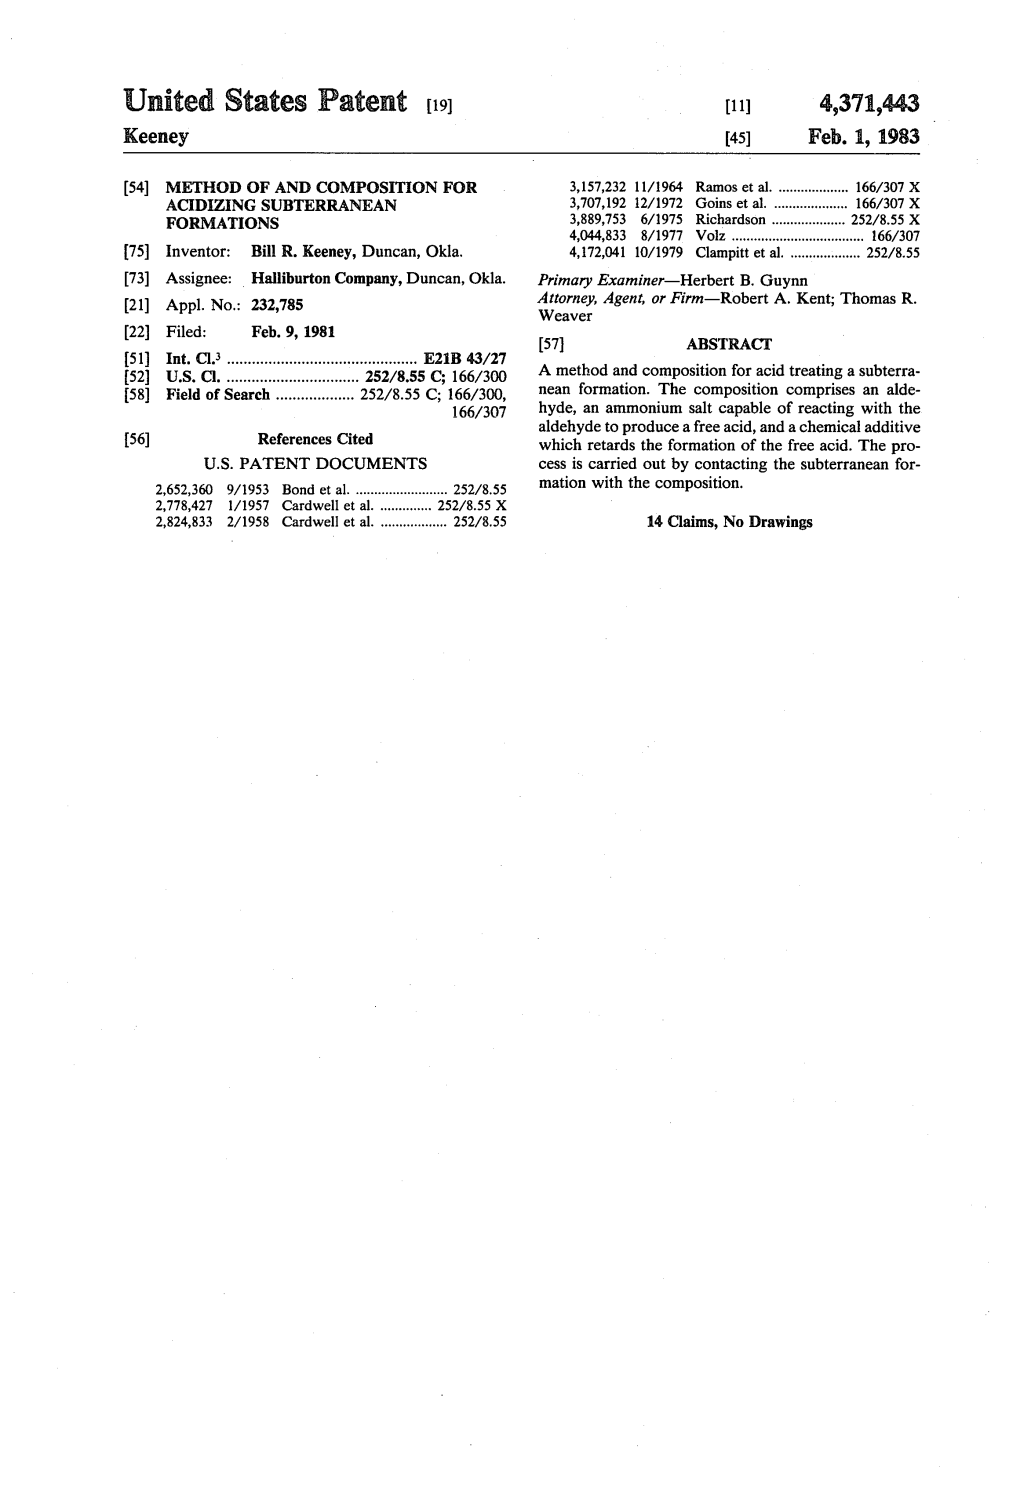 United States Patent (19) 11) 4,371,443 Keeney 45) Feb